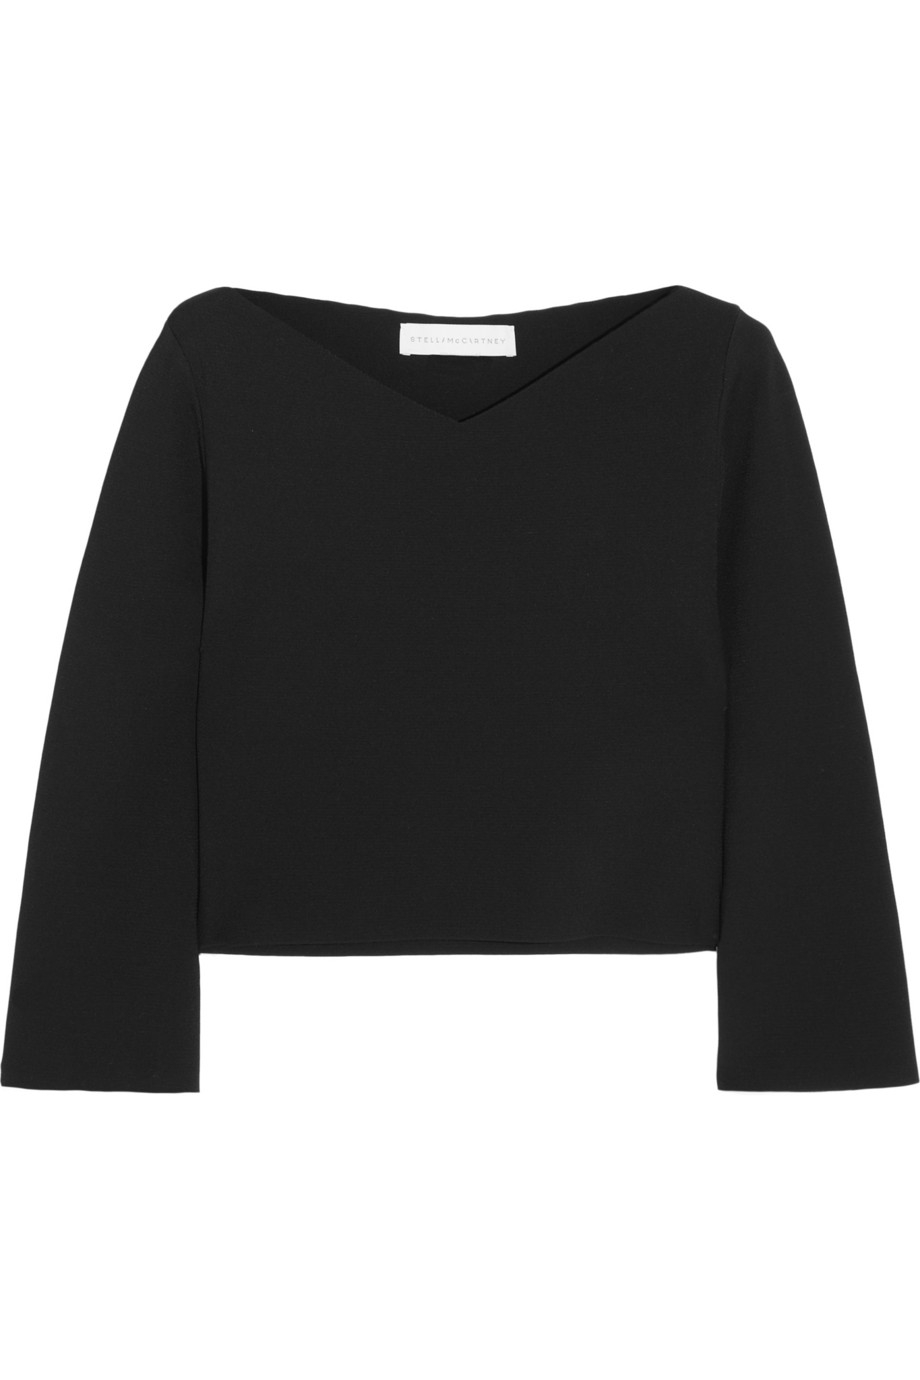 Stella Mccartney Cropped Stretch-Scuba Jersey Top in Black | Lyst